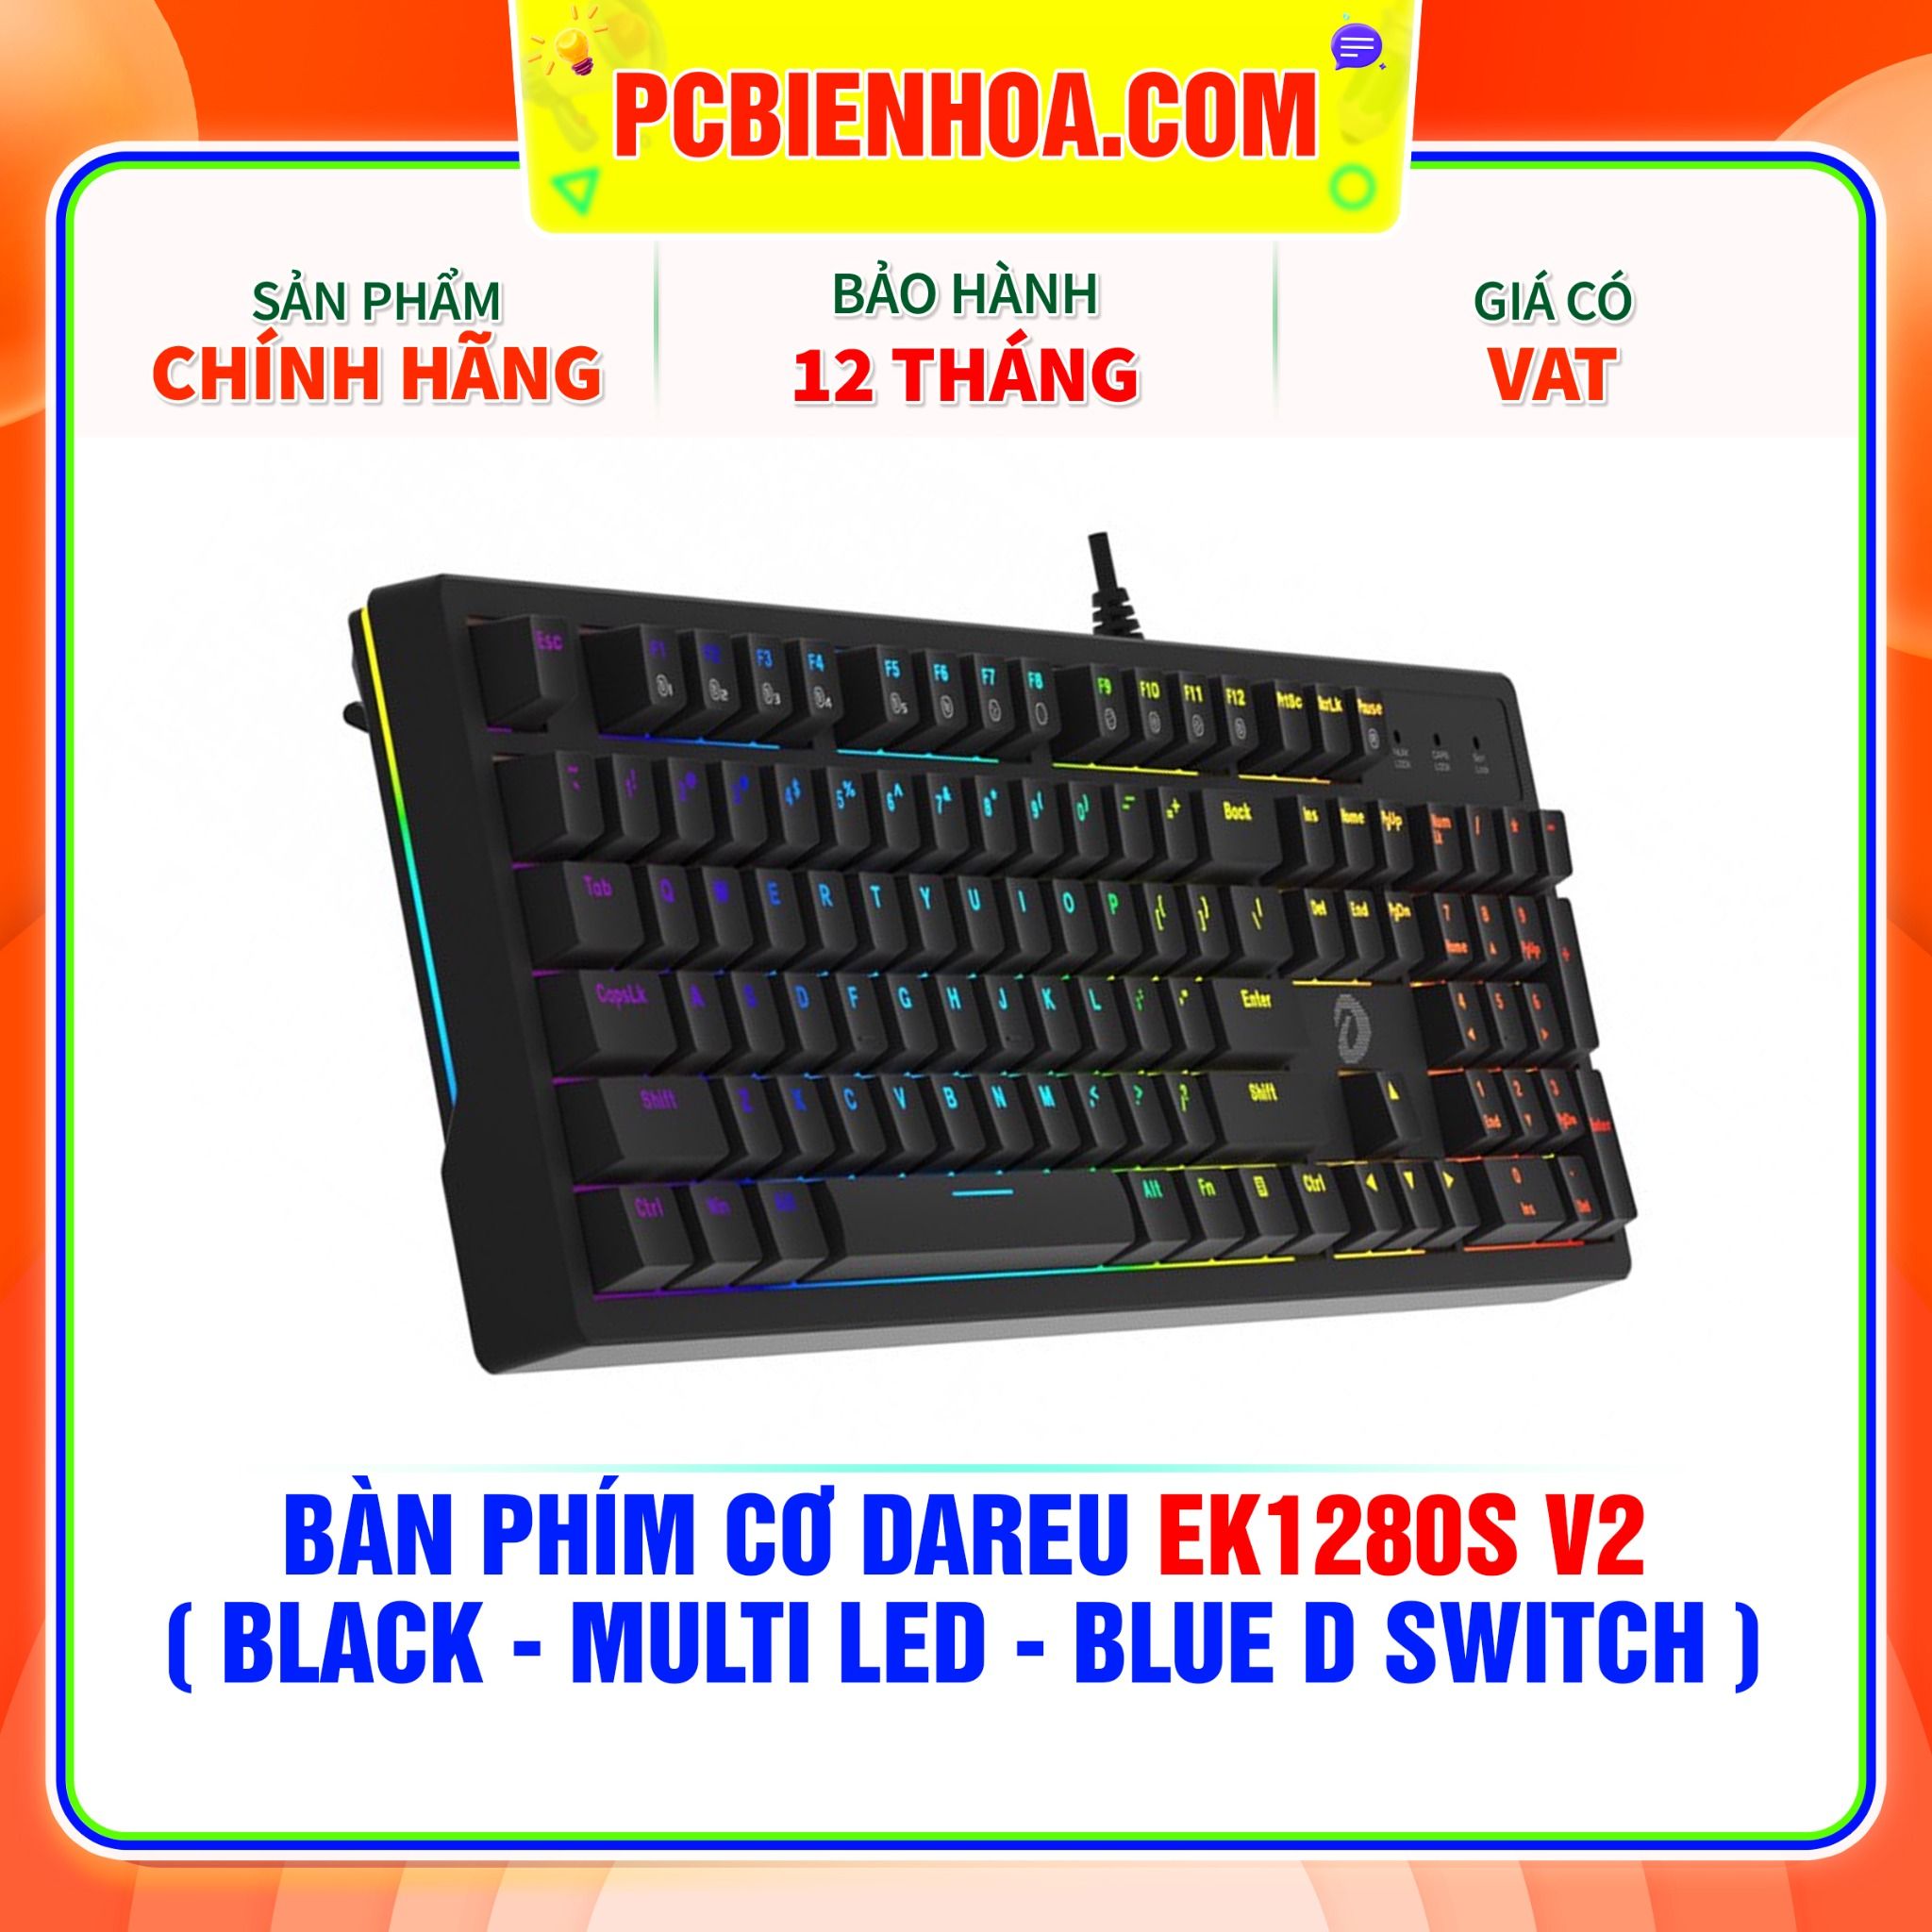  BÀN PHÍM CƠ DAREU EK1280s v2 ( BLACK - MULTI LED - BLUE D SWITCH ) 